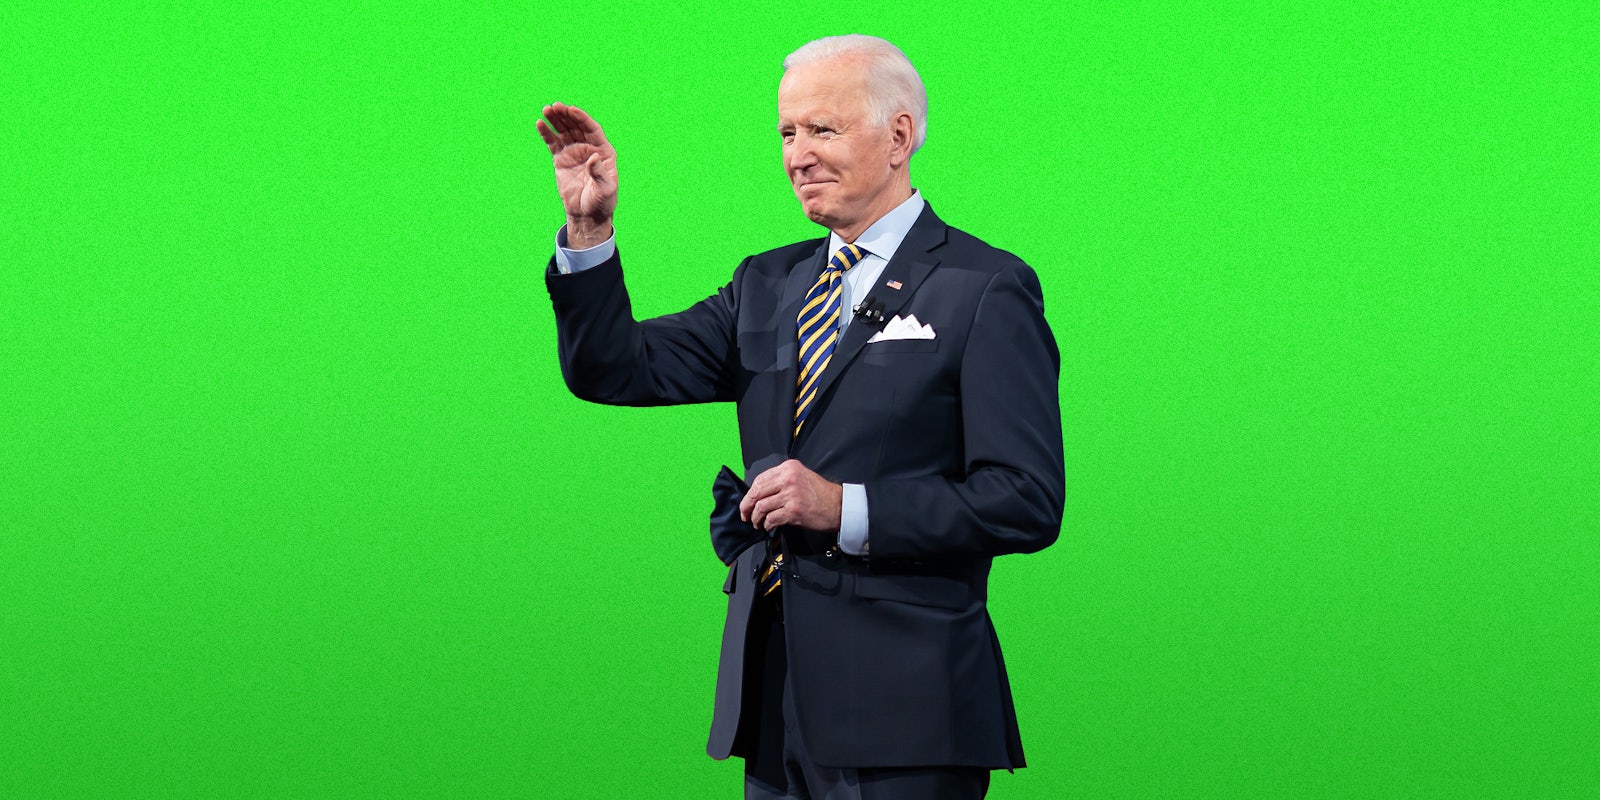 Joe Biden on a green background.